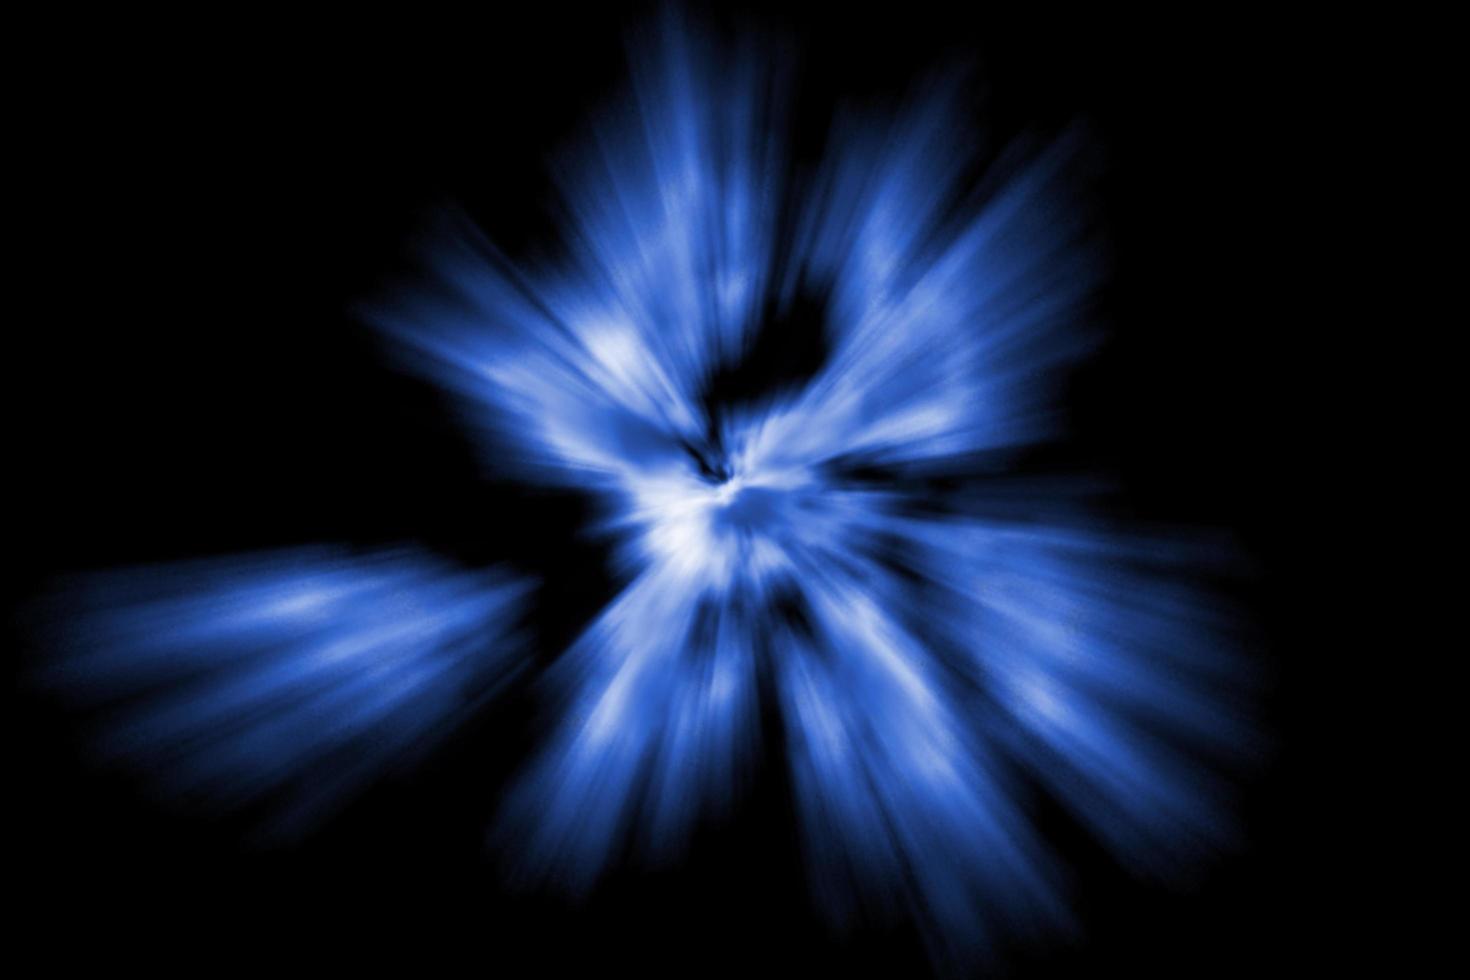 blue beam light blast blurred Image,abstract background,brush effect photo